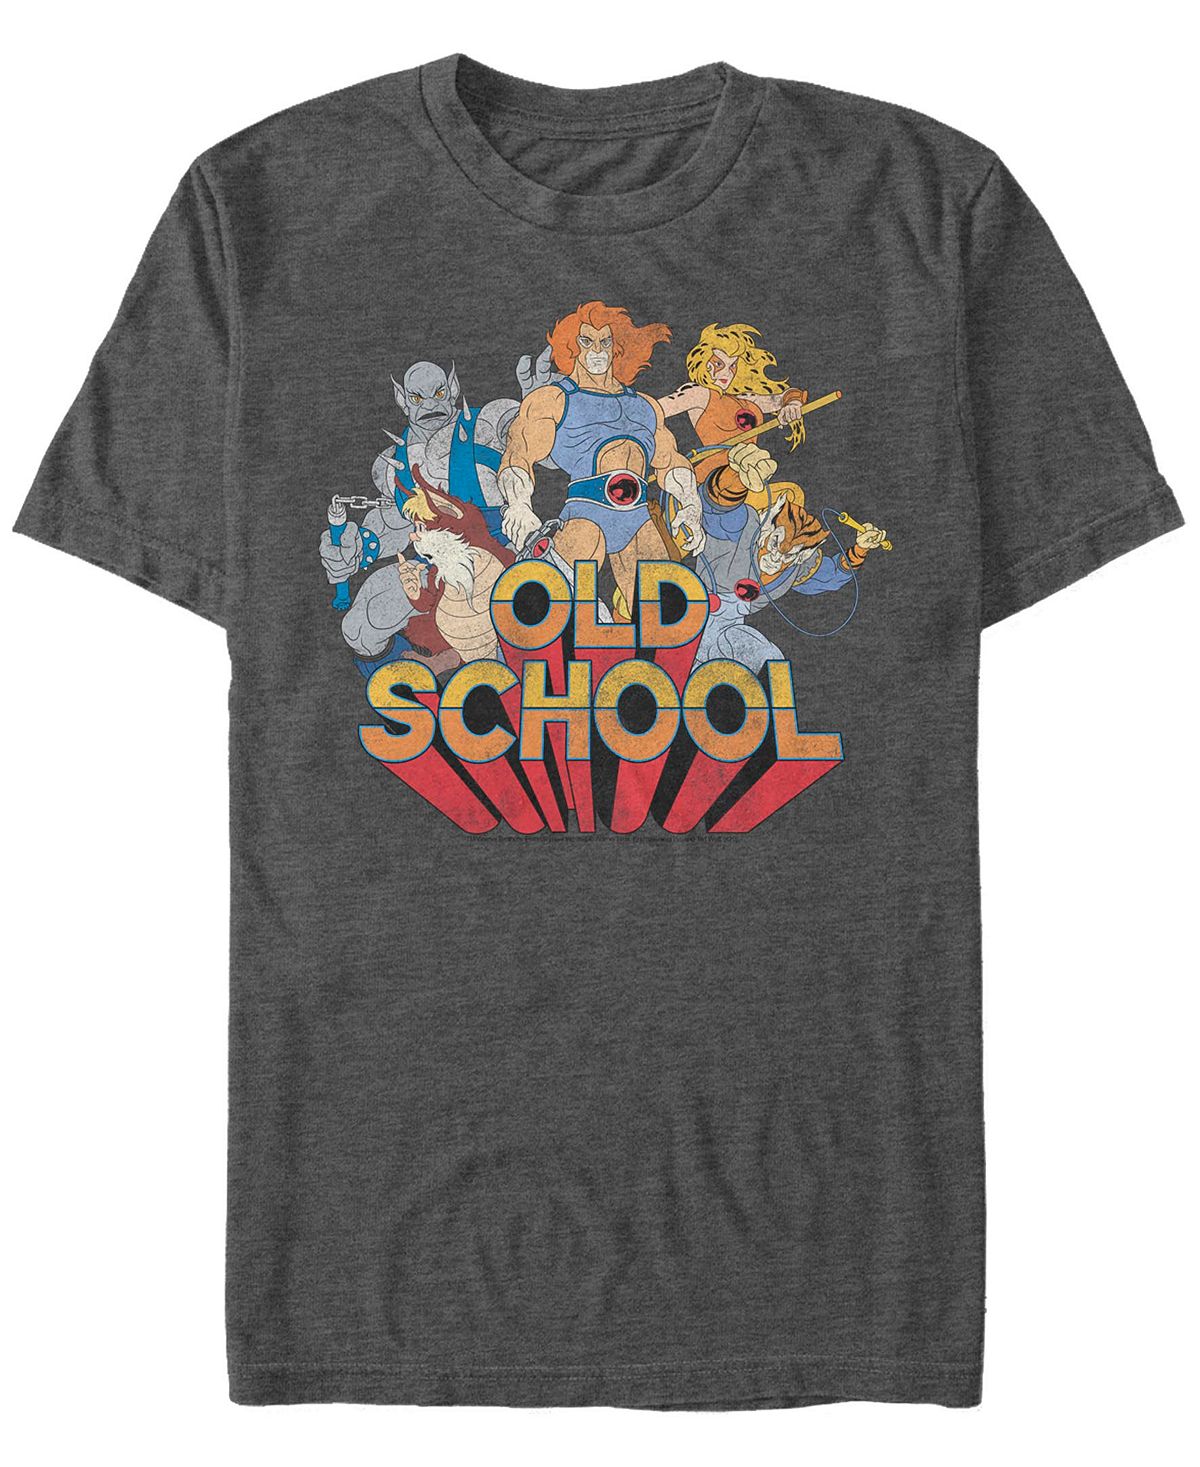 Мужская футболка thundercats old school с коротким рукавом Fifth Sun, мульти